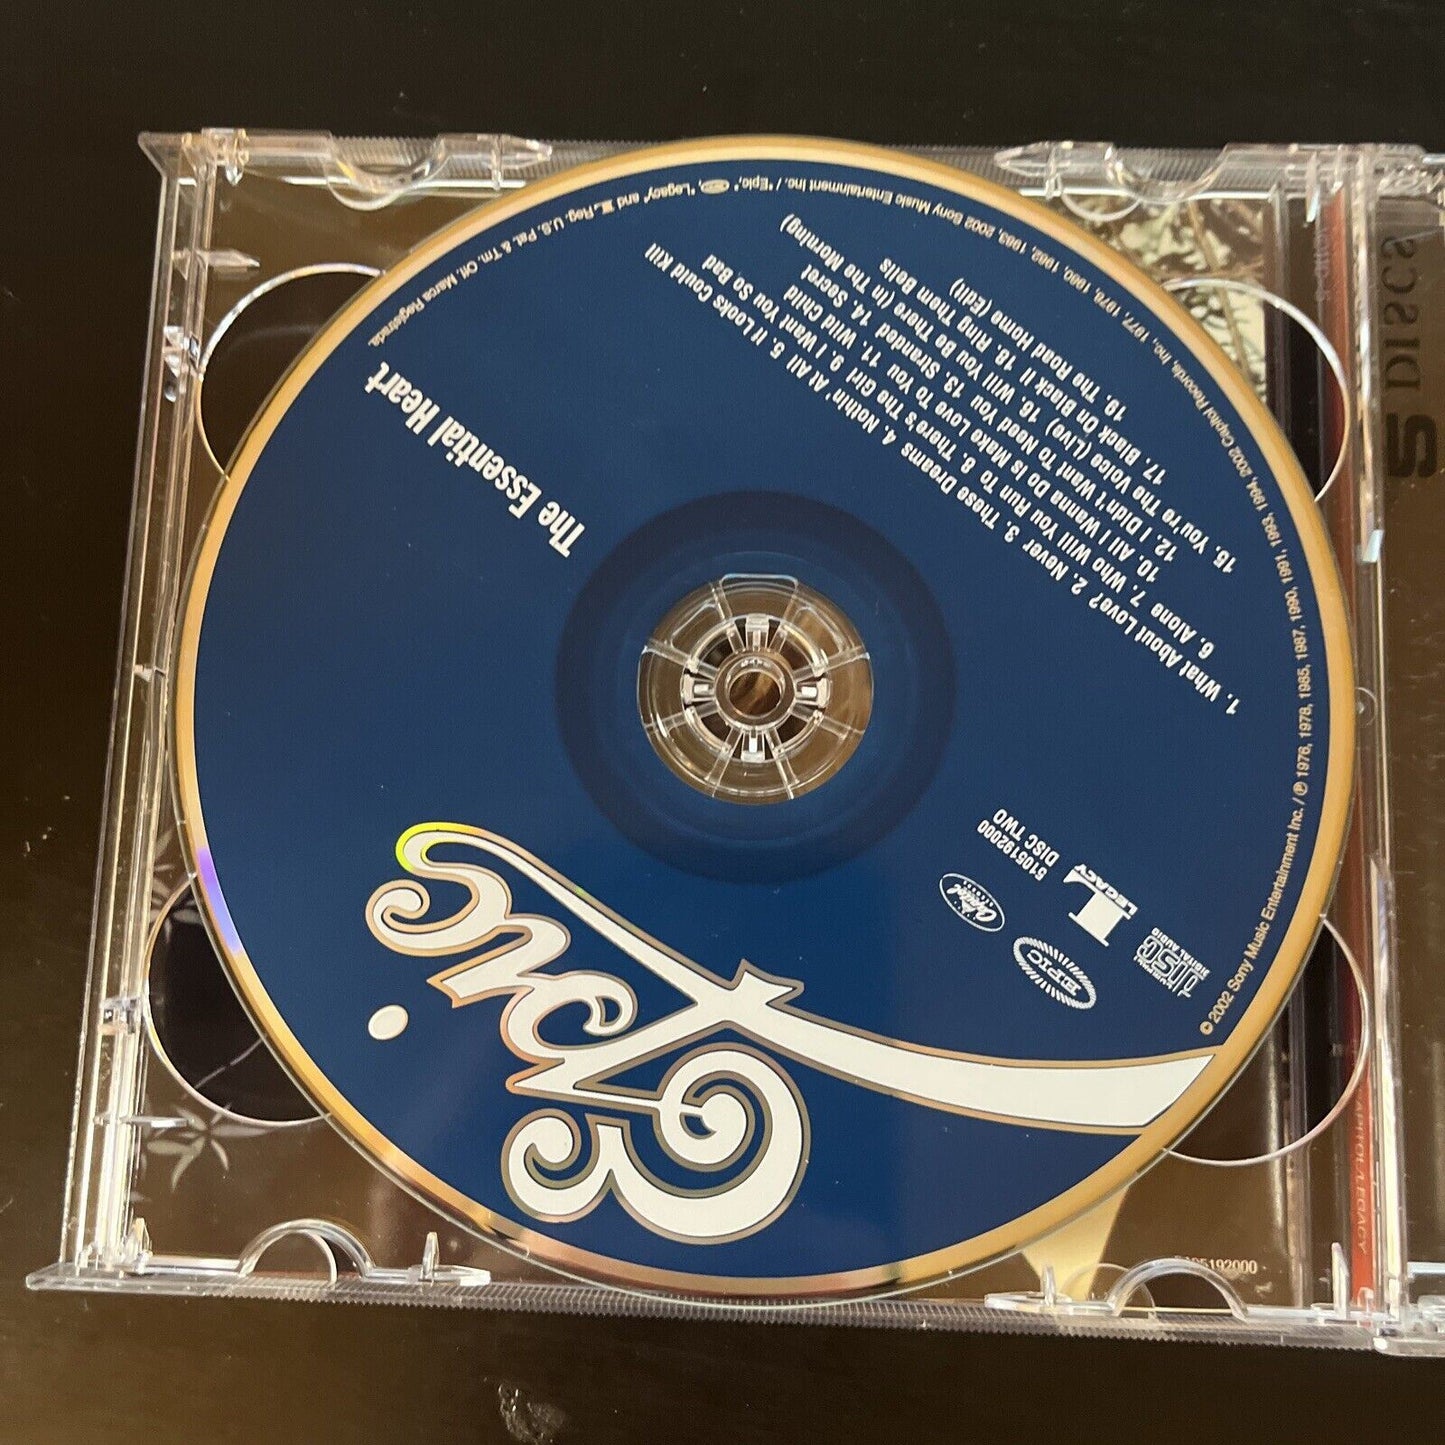 Heart - The Essential Heart (CD, 2002, 2-Disc)